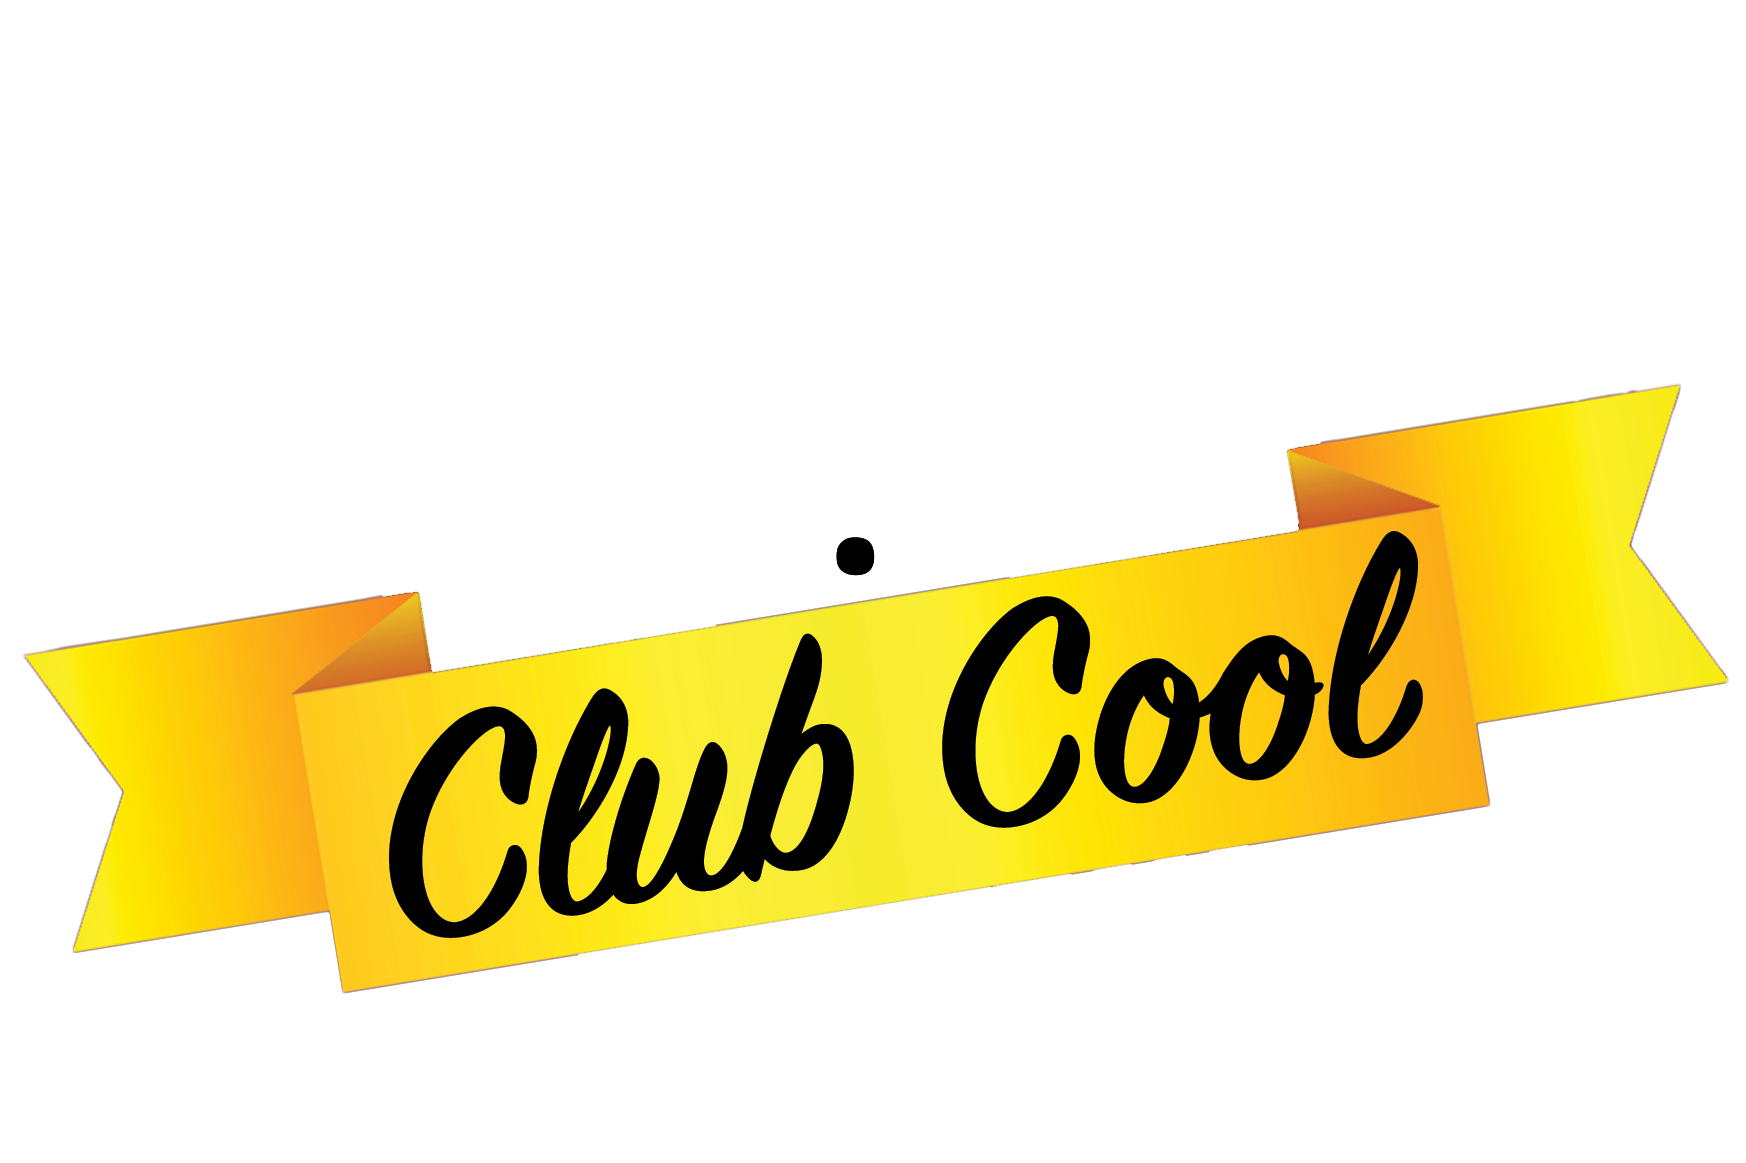 Club Cool